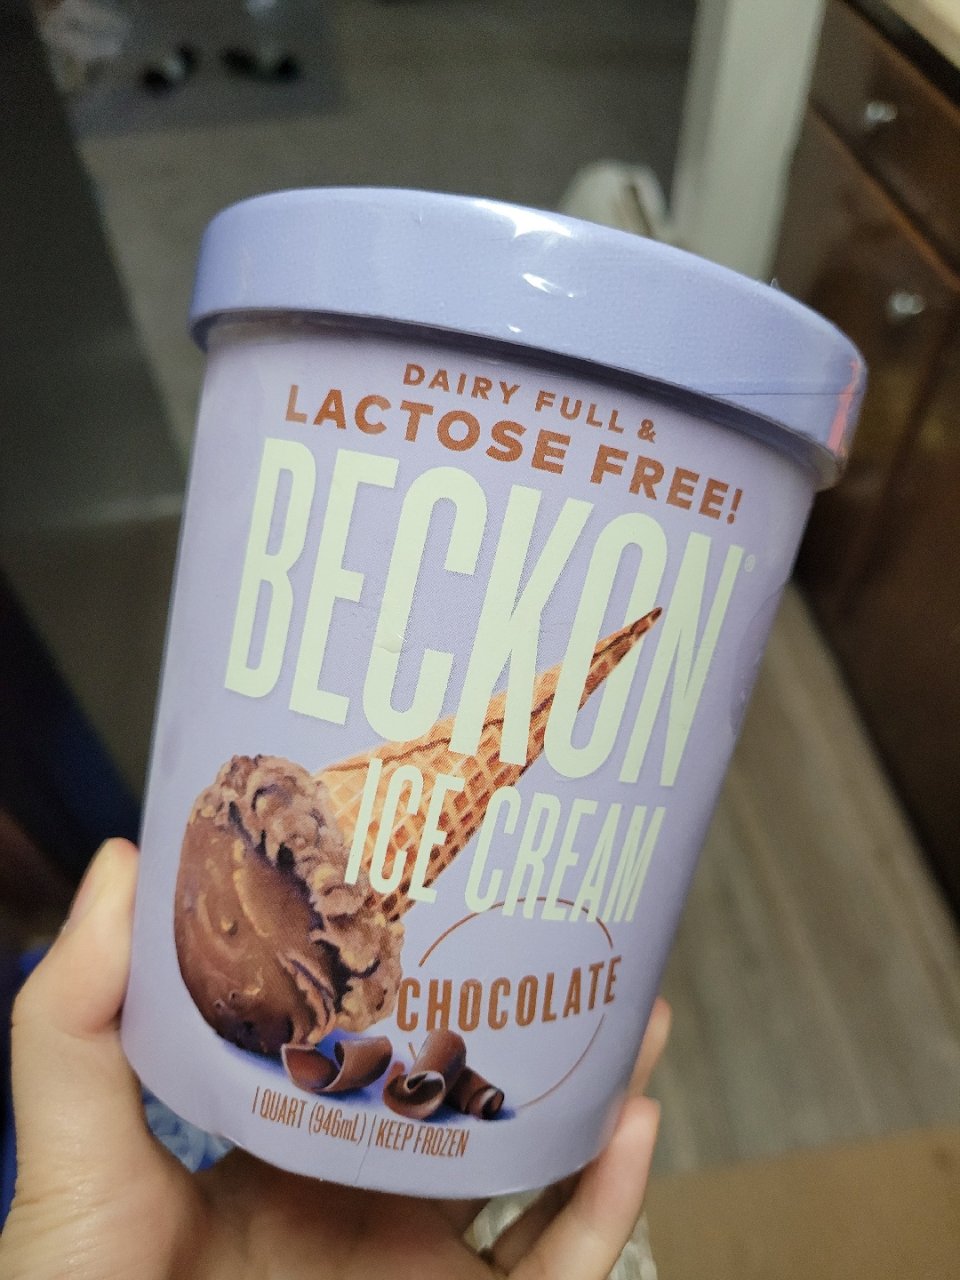 Flavors - Beckon Ice Cream